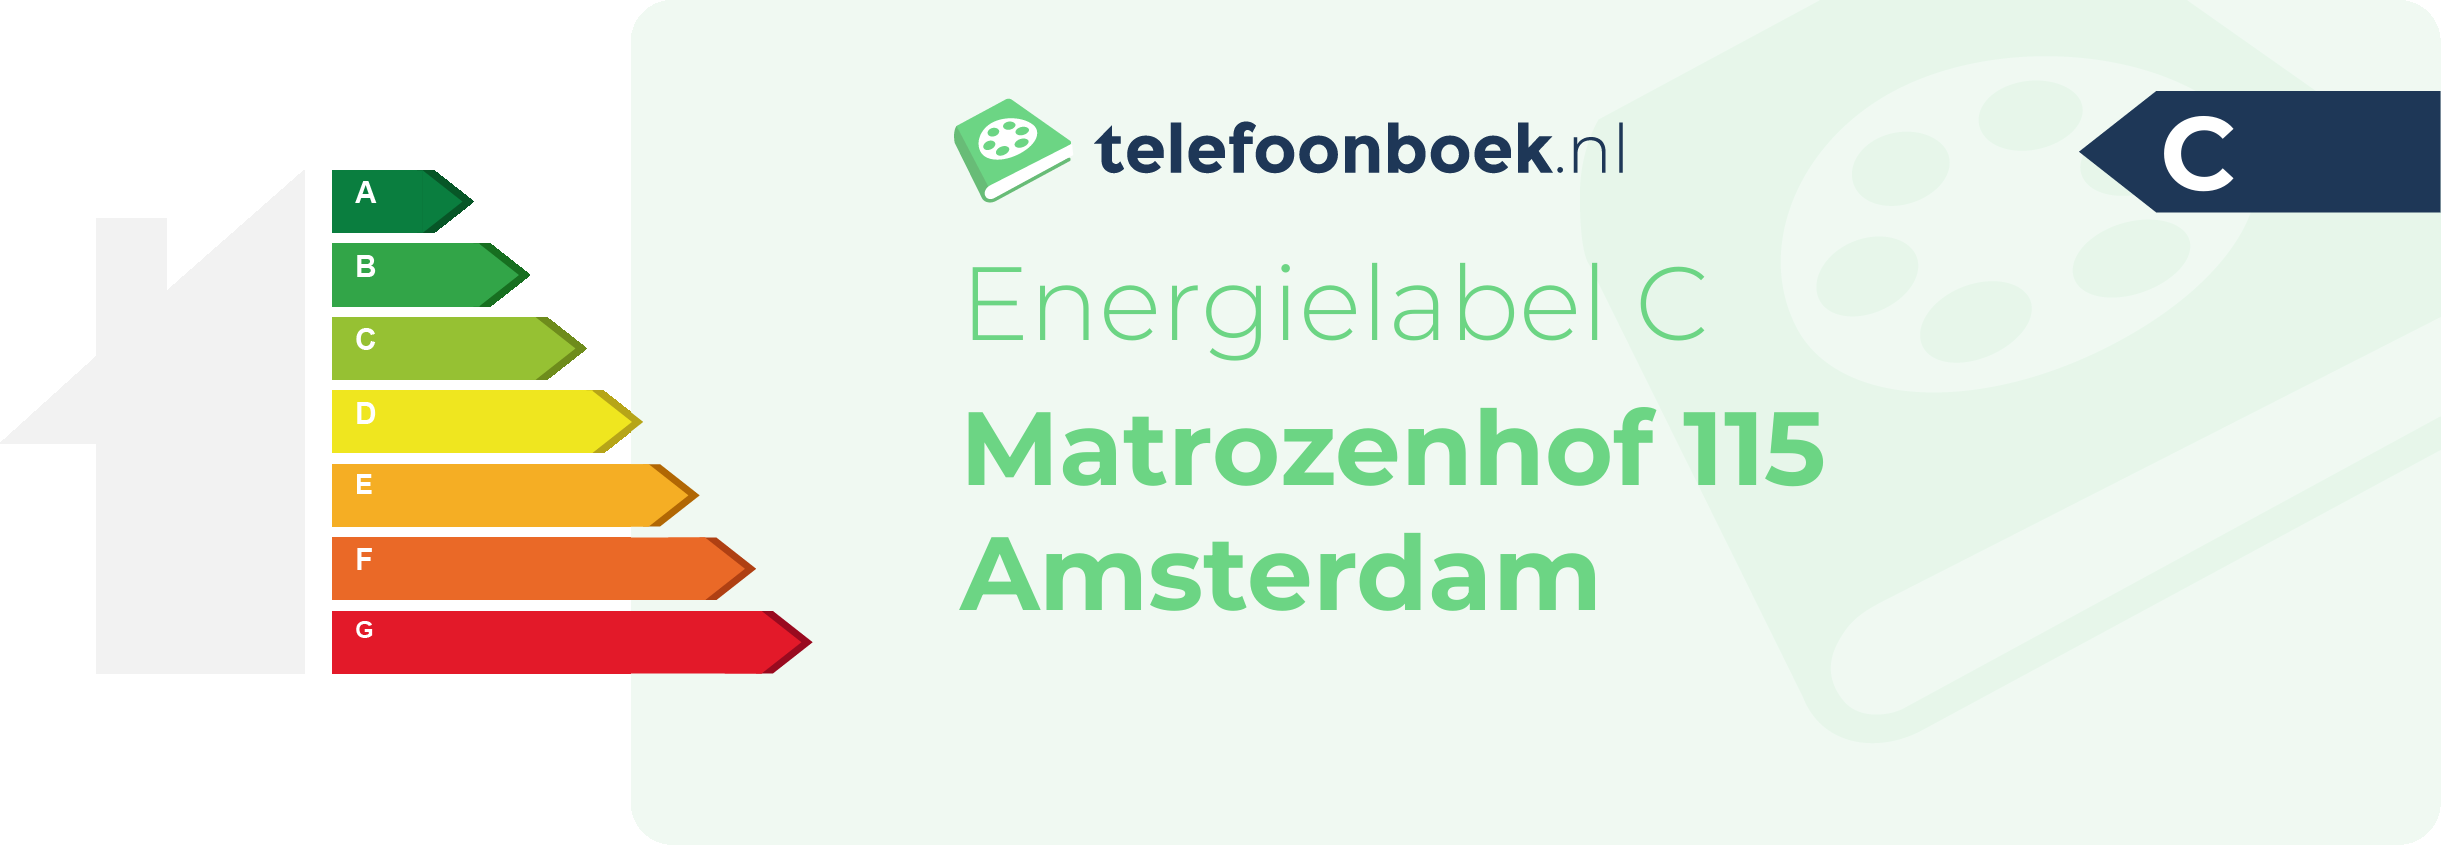 Energielabel Matrozenhof 115 Amsterdam